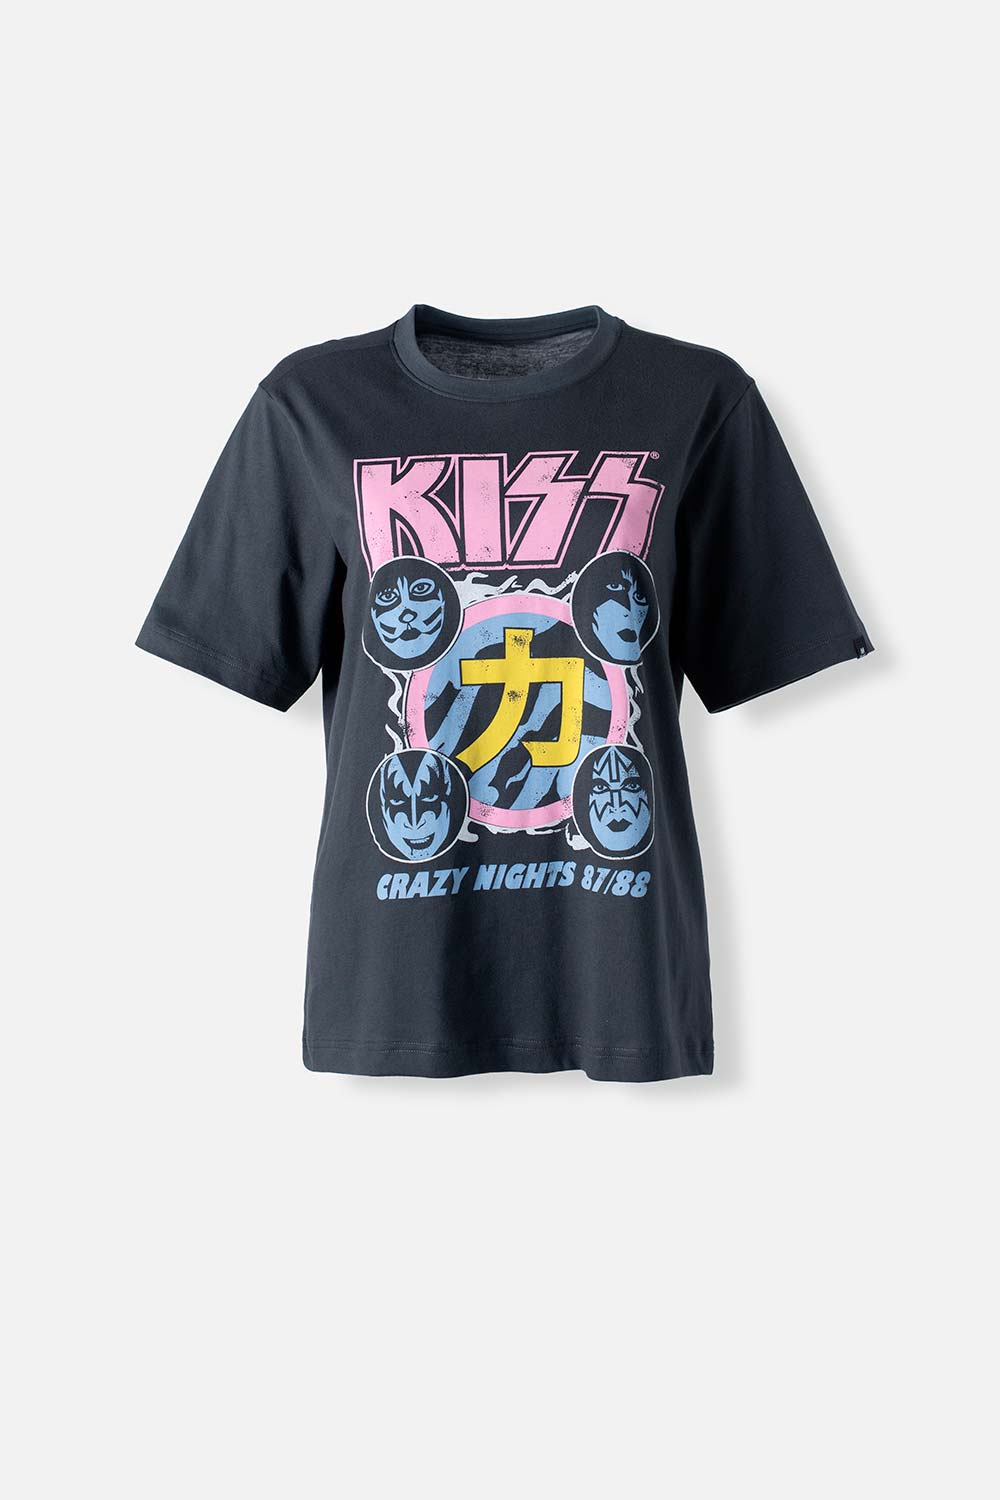 Camiseta de Kiss gris manga corta para mujer XS-0